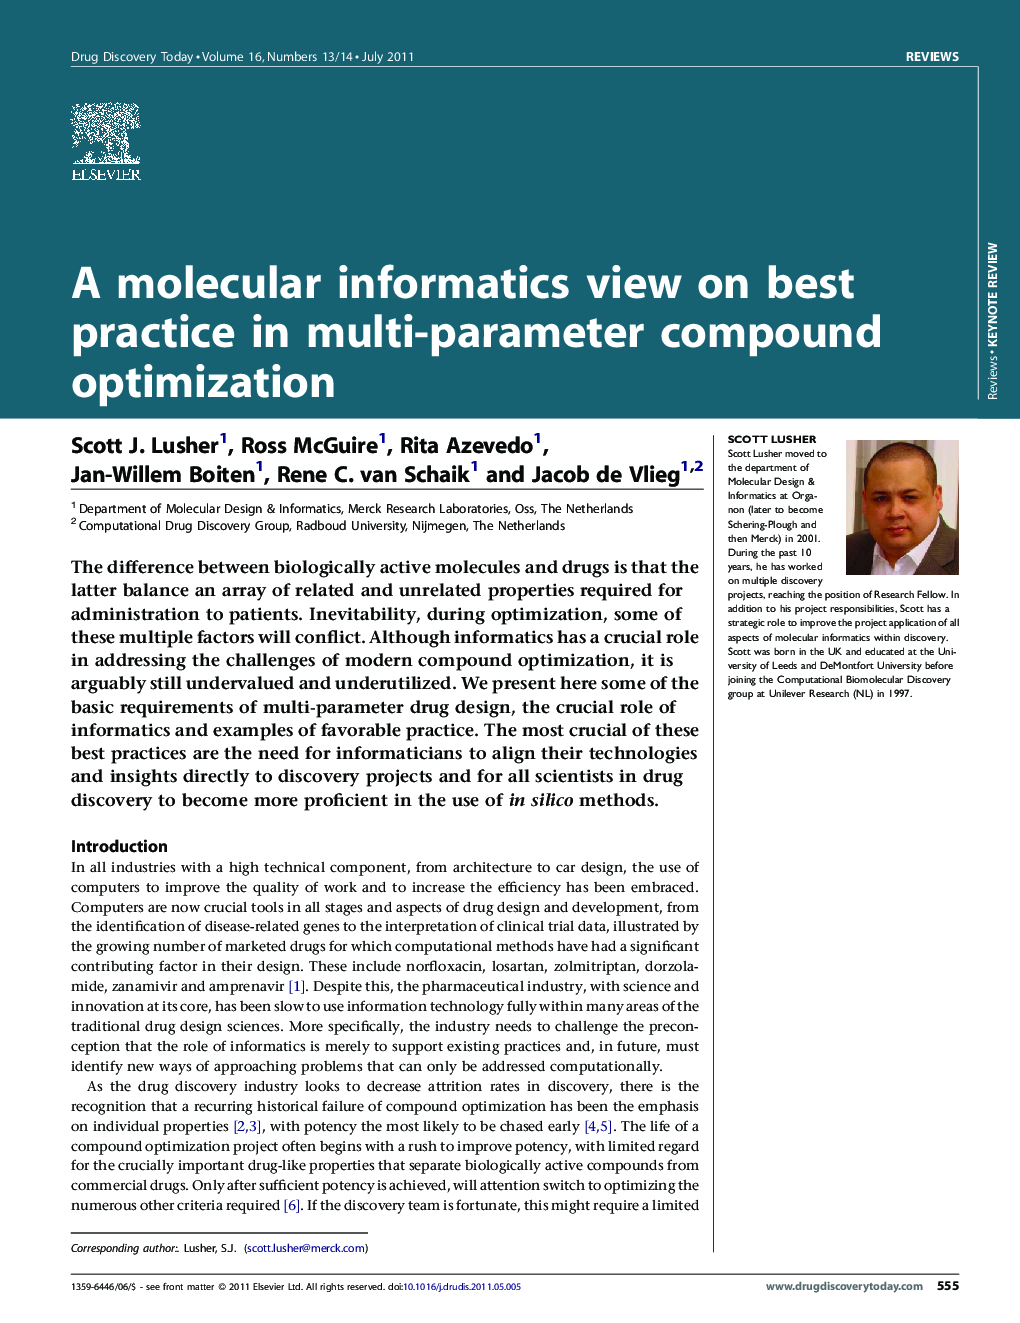 A molecular informatics view on best practice in multi-parameter compound optimization